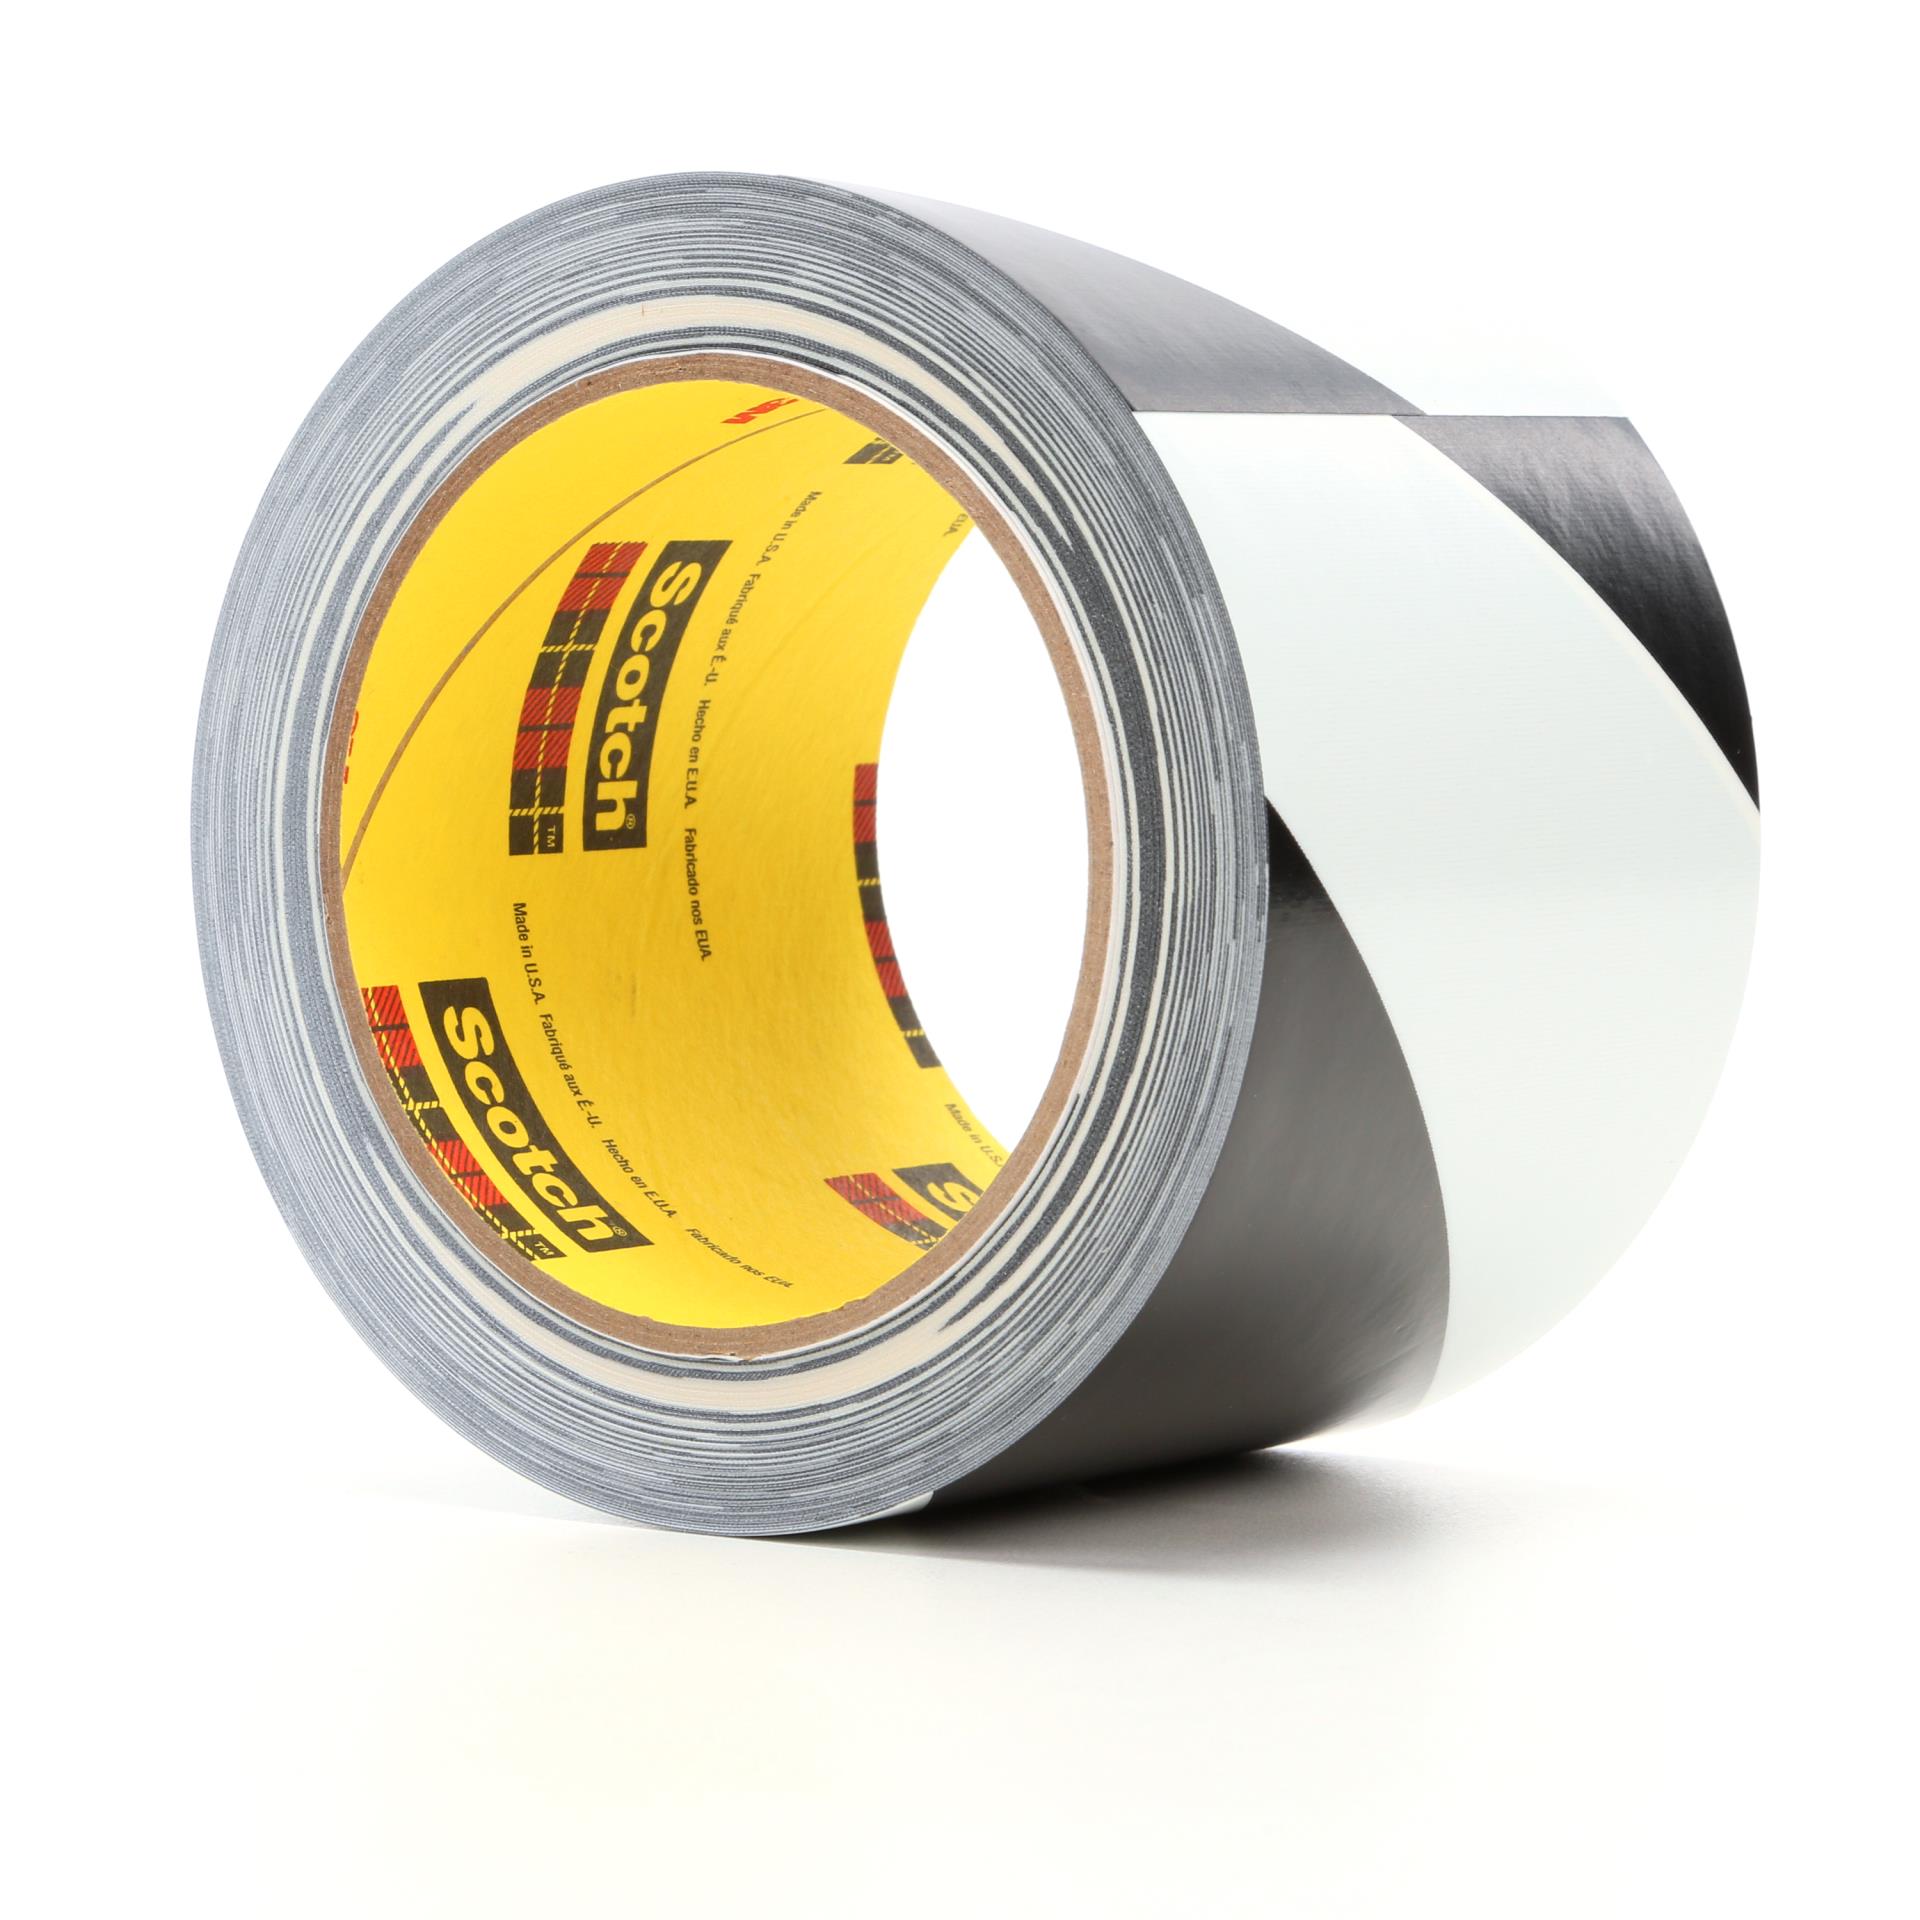 00051115688201 | 3M™ Safety Stripe Vinyl Tape 5700, Black/White, 3 